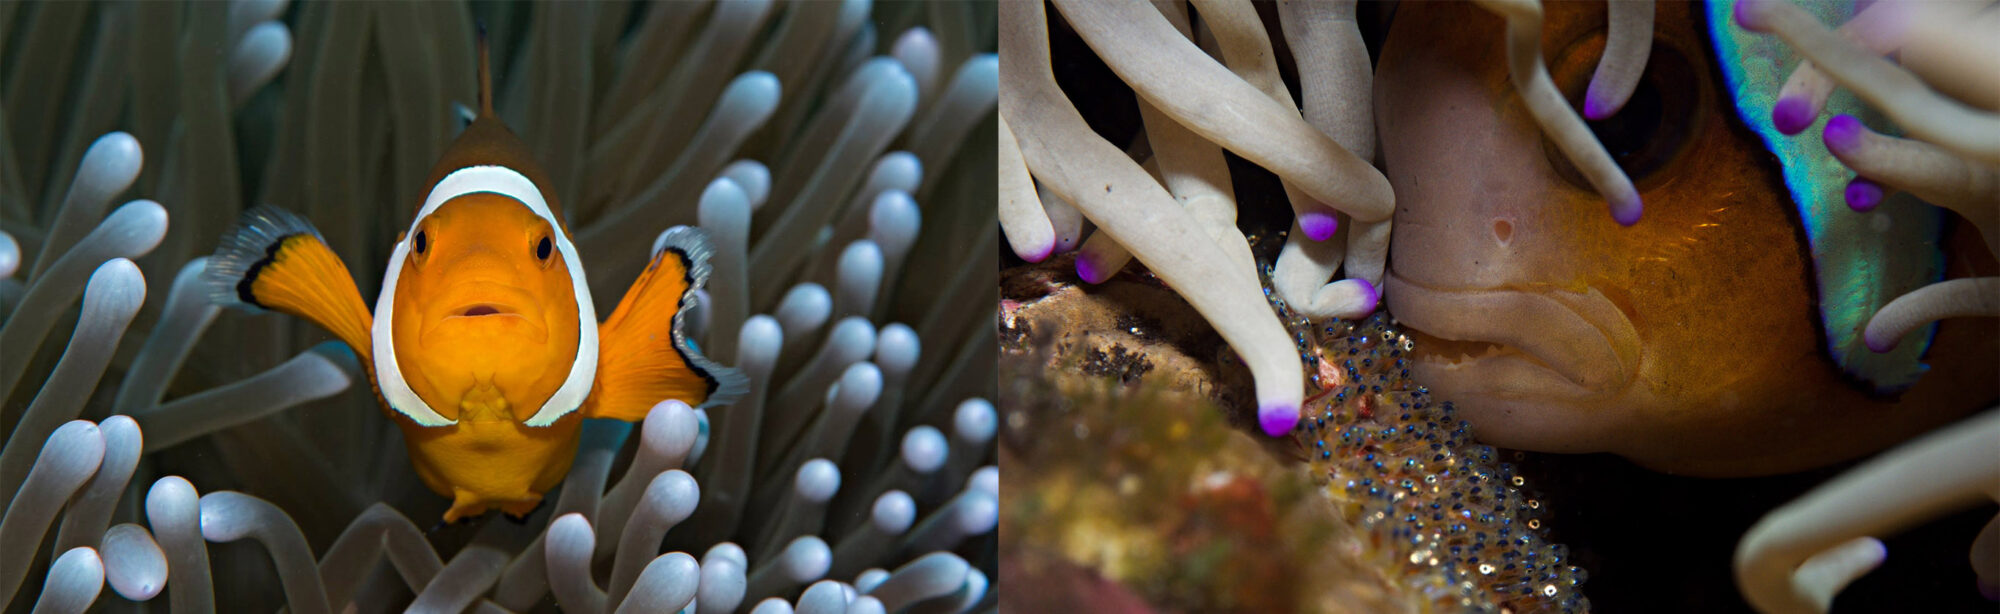 Nemo's Biggest lie, Marine Biology, Daniel Geary, Atmosphere Resorts, Dumaguete Philippines